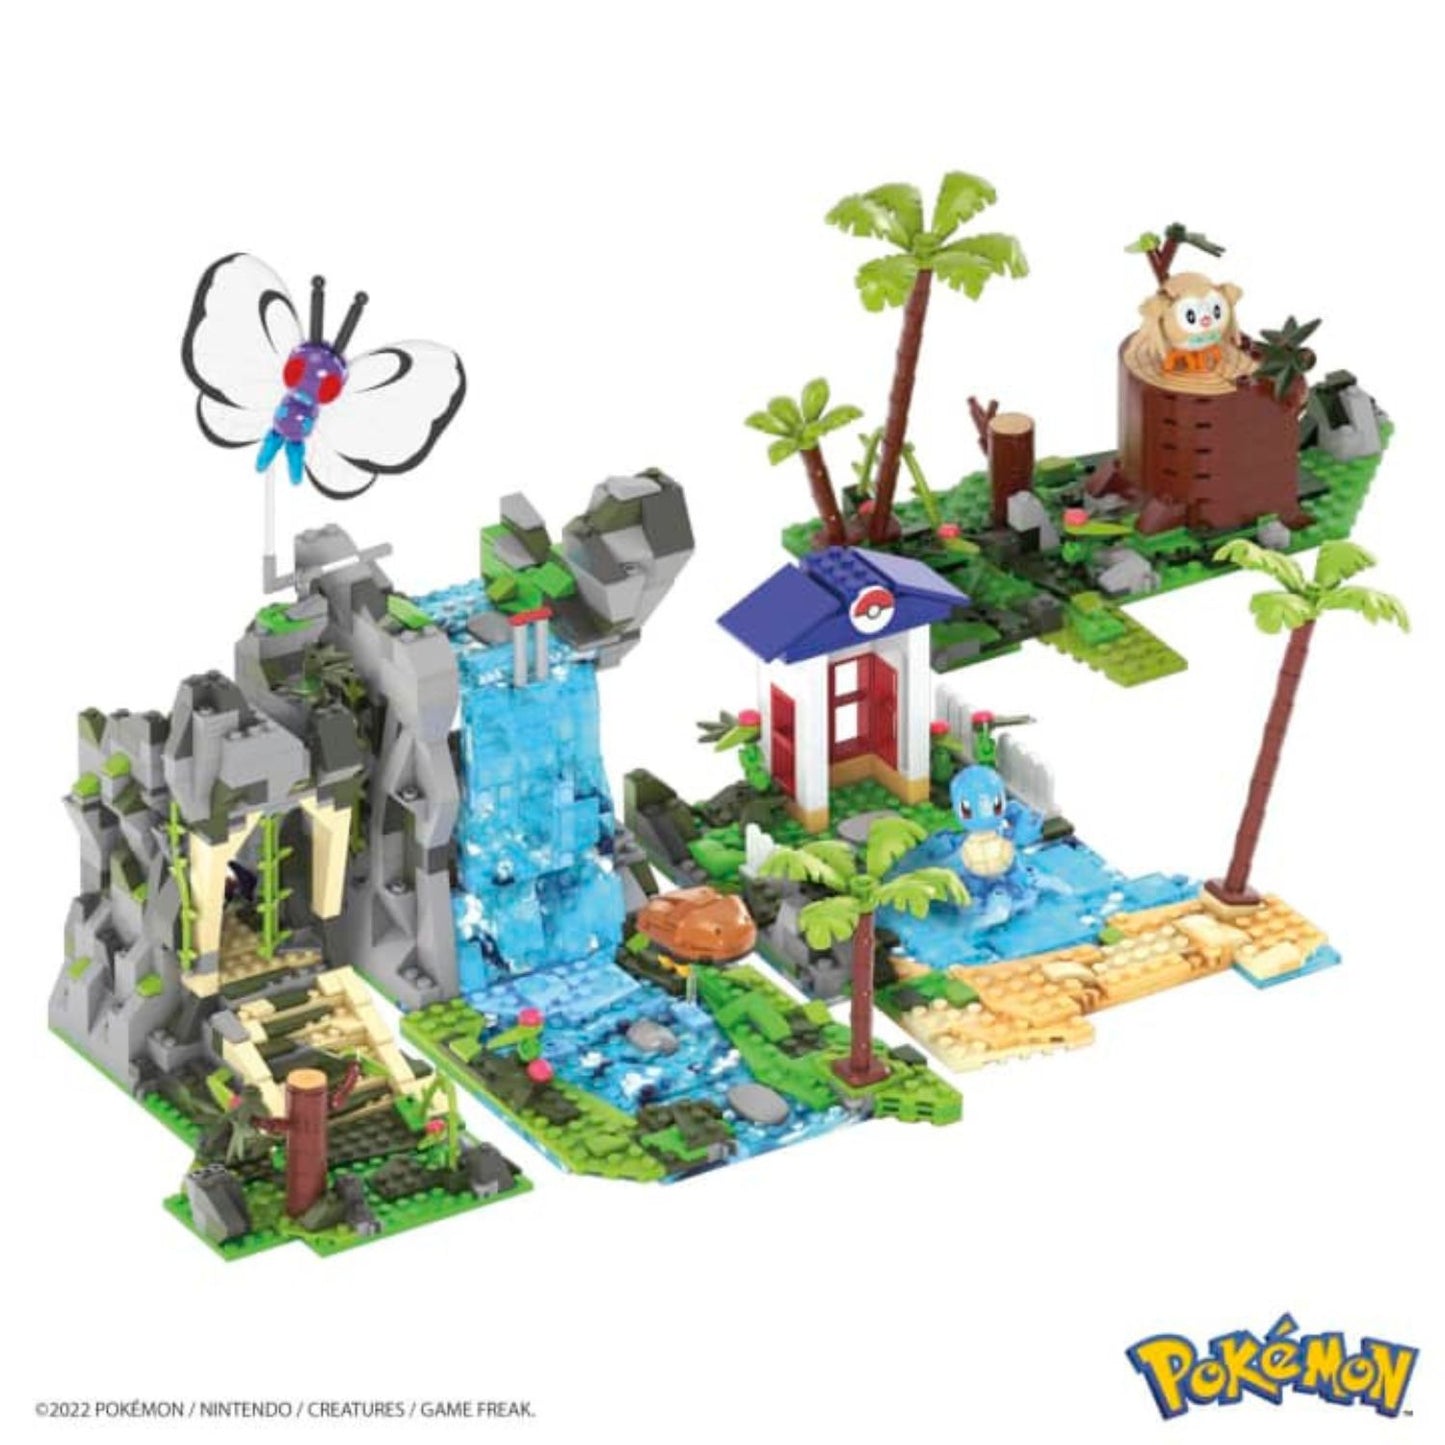 Mattel - Mega Bloks Pokémon Adventure Builder Jungle Expedition HHN61